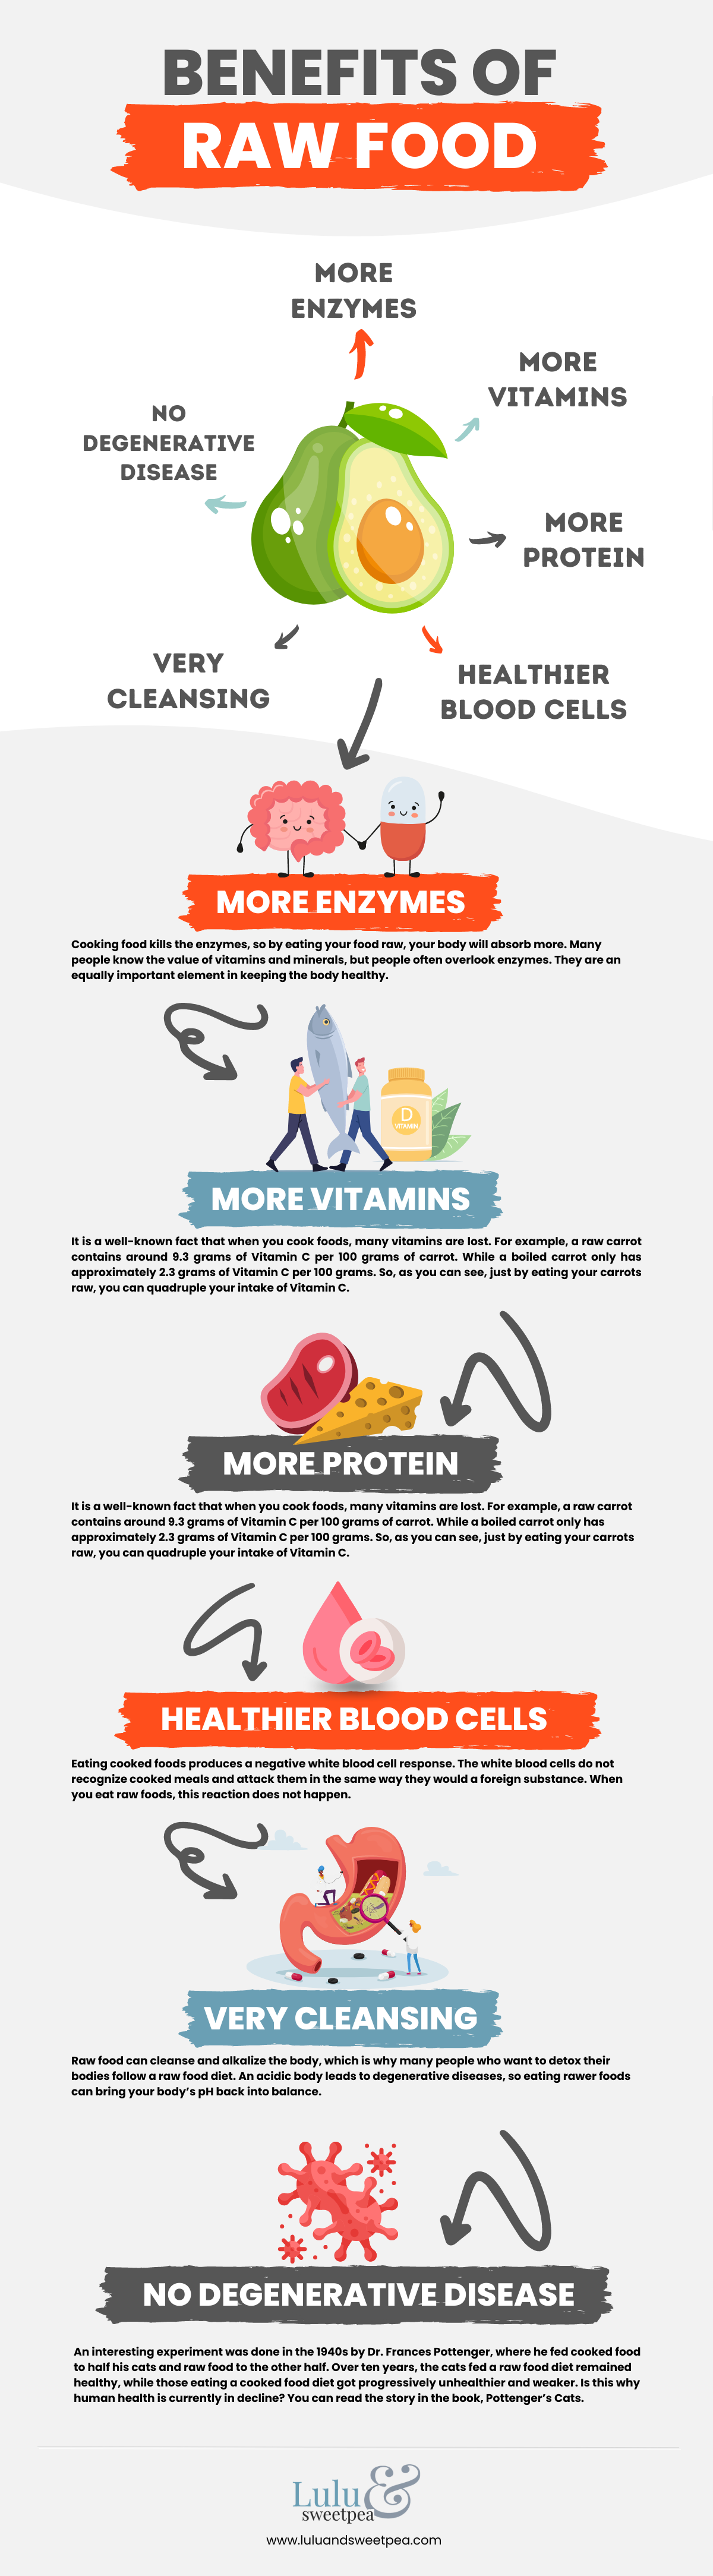 Benefits of Raw Food